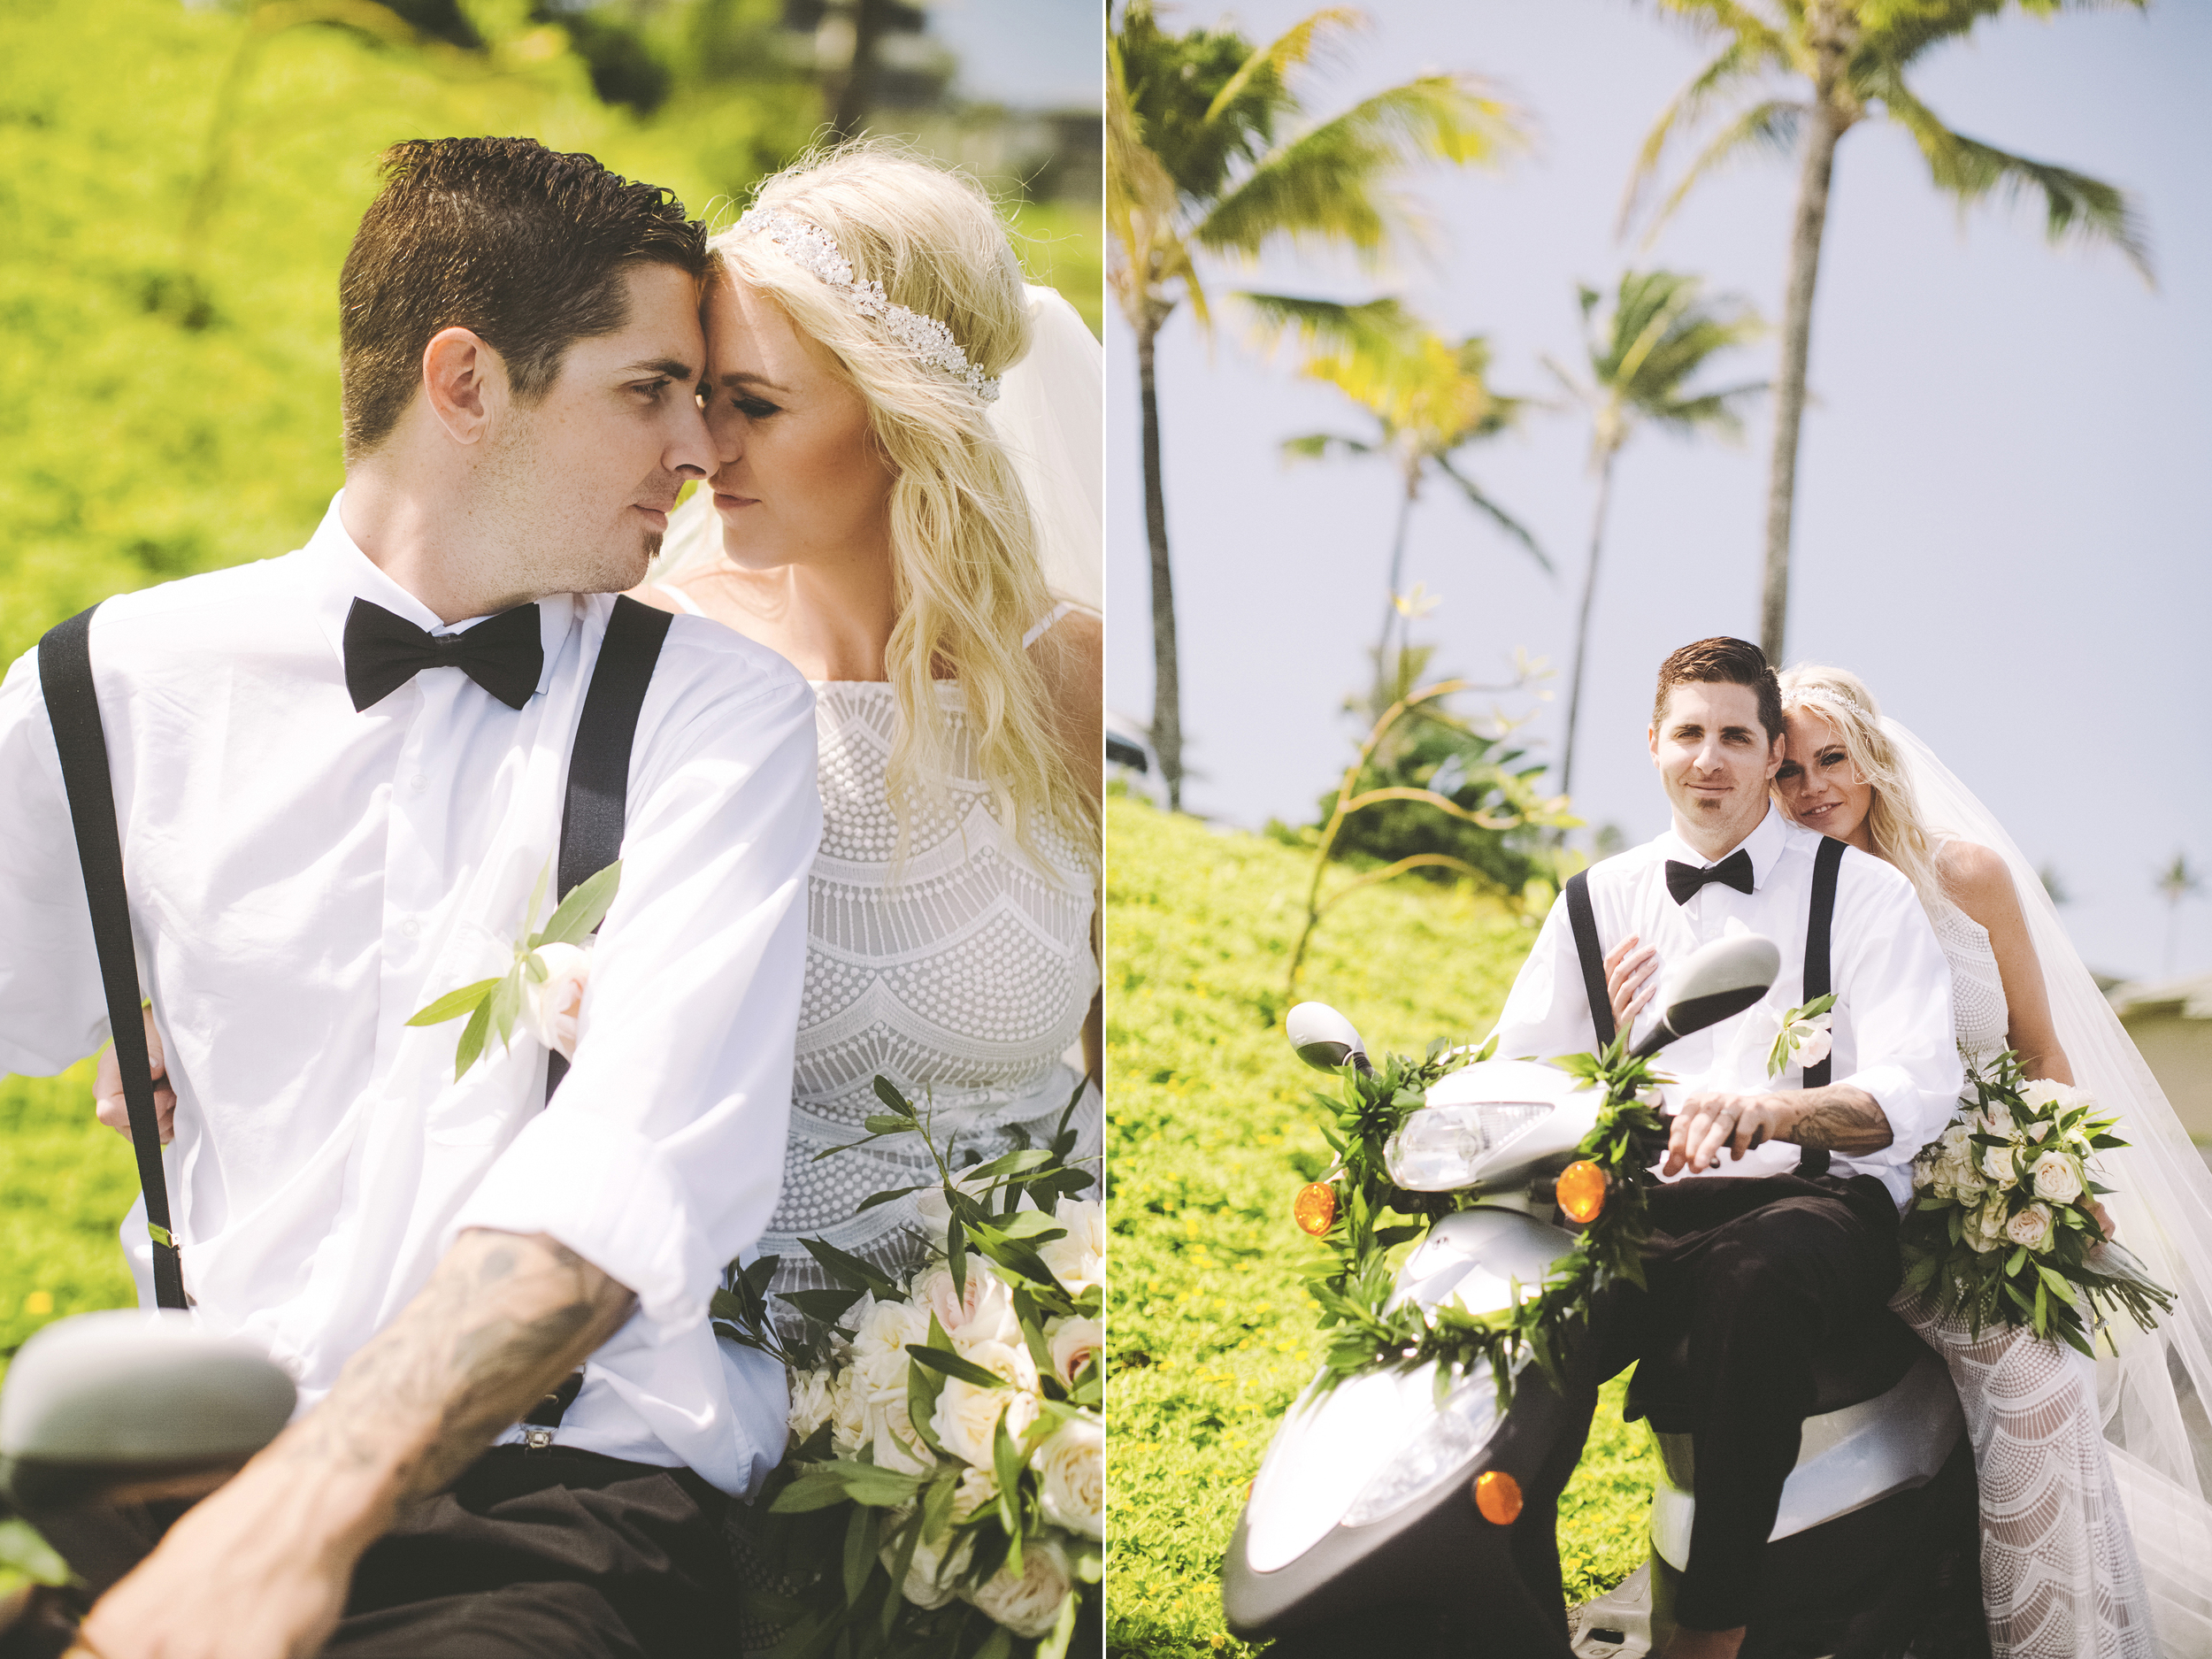 angie-diaz-photography-hawaii-wedding-58.jpg